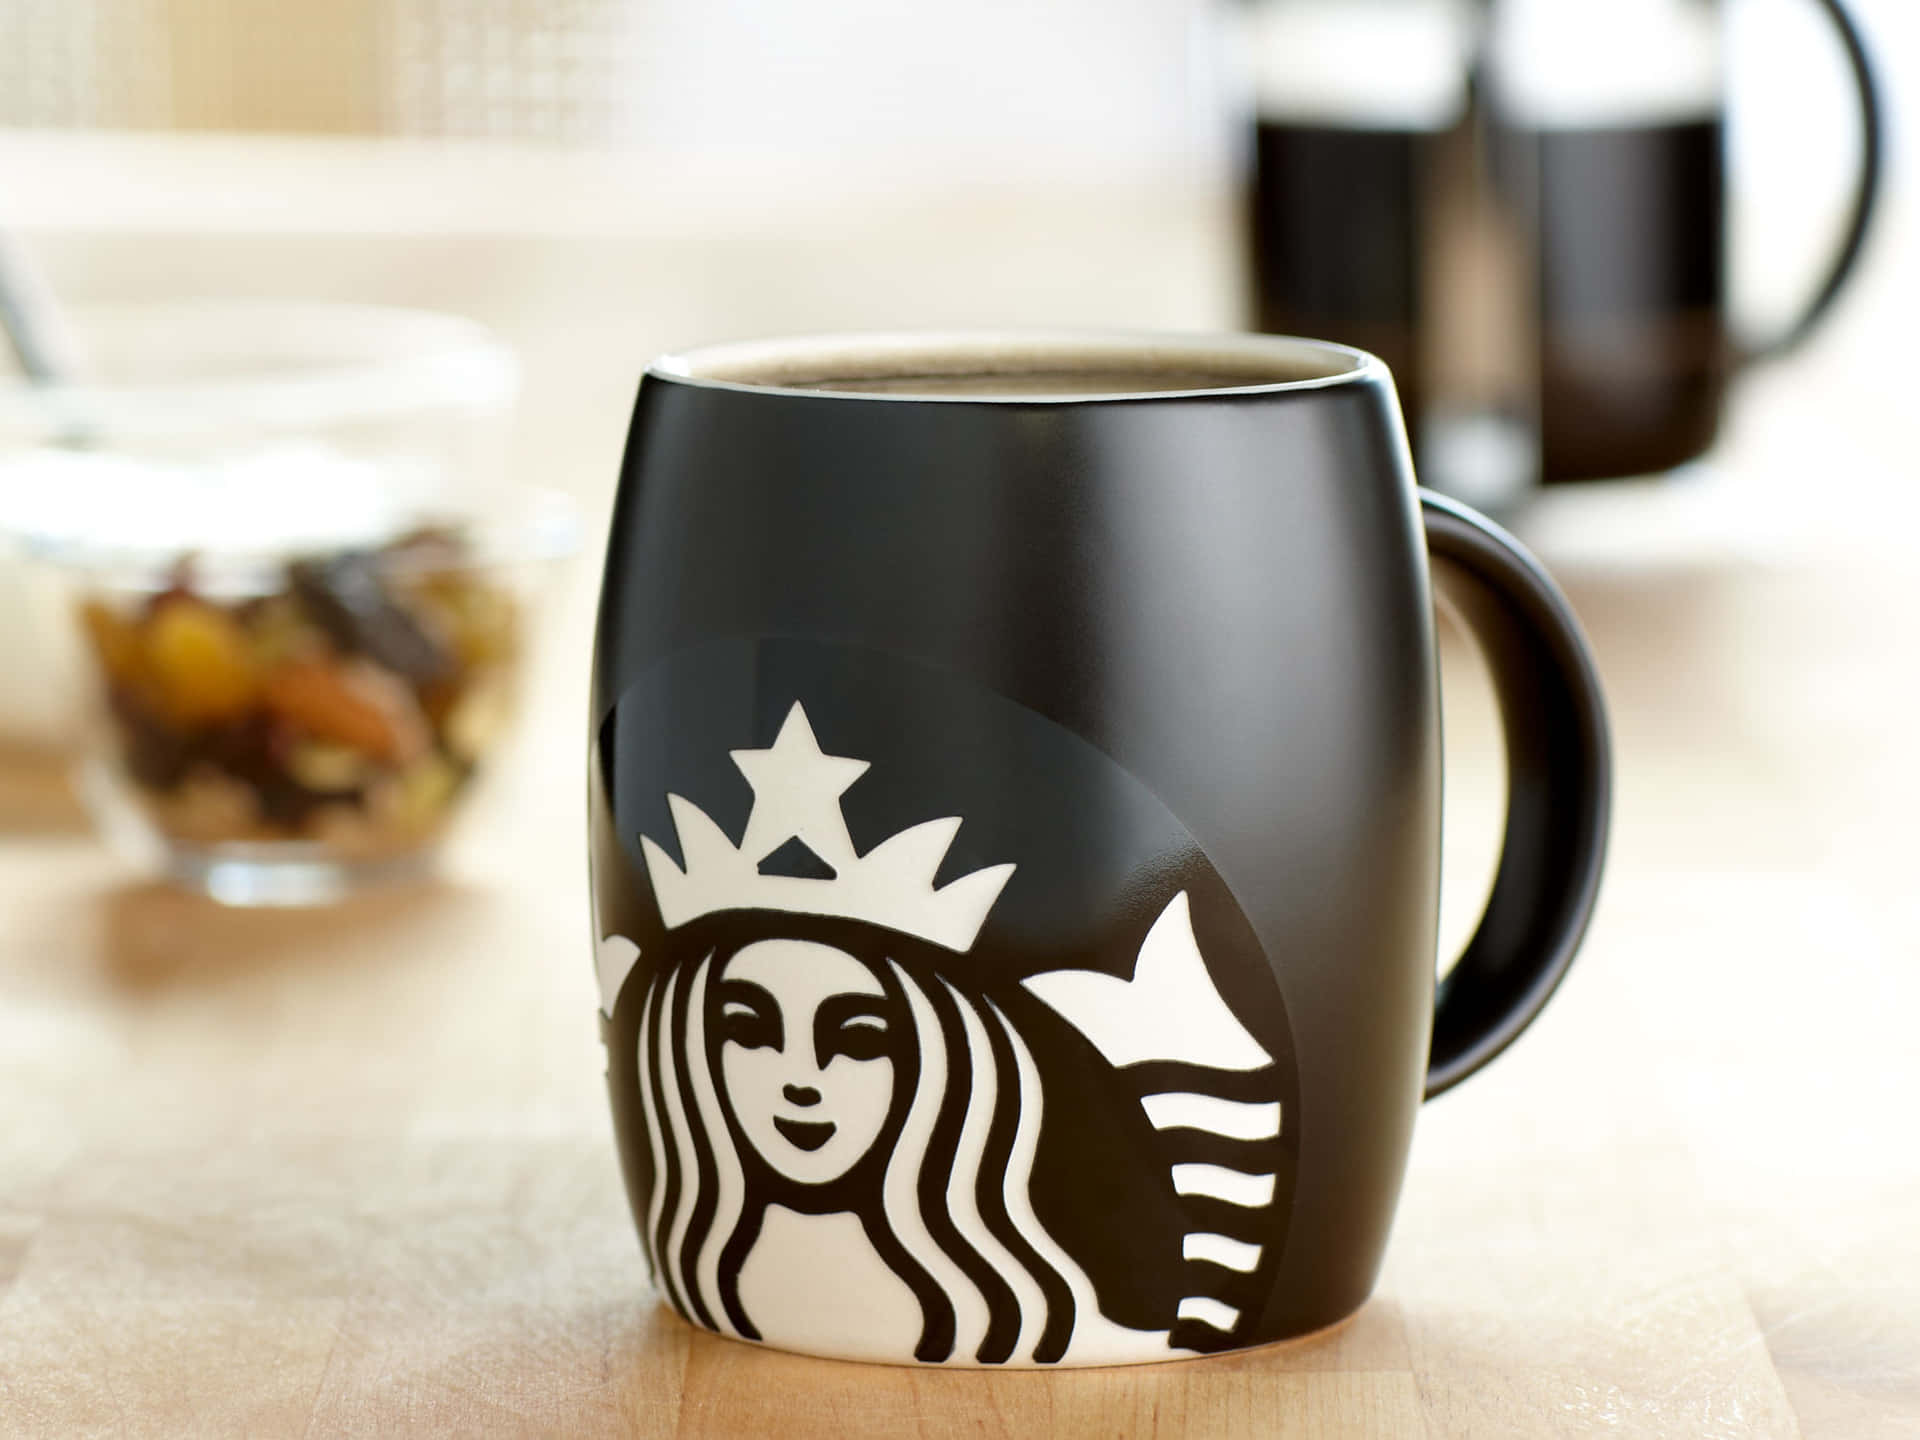 Nydden Perfekte Kop Kaffe Med En Klassisk Starbucks-oplevelse.